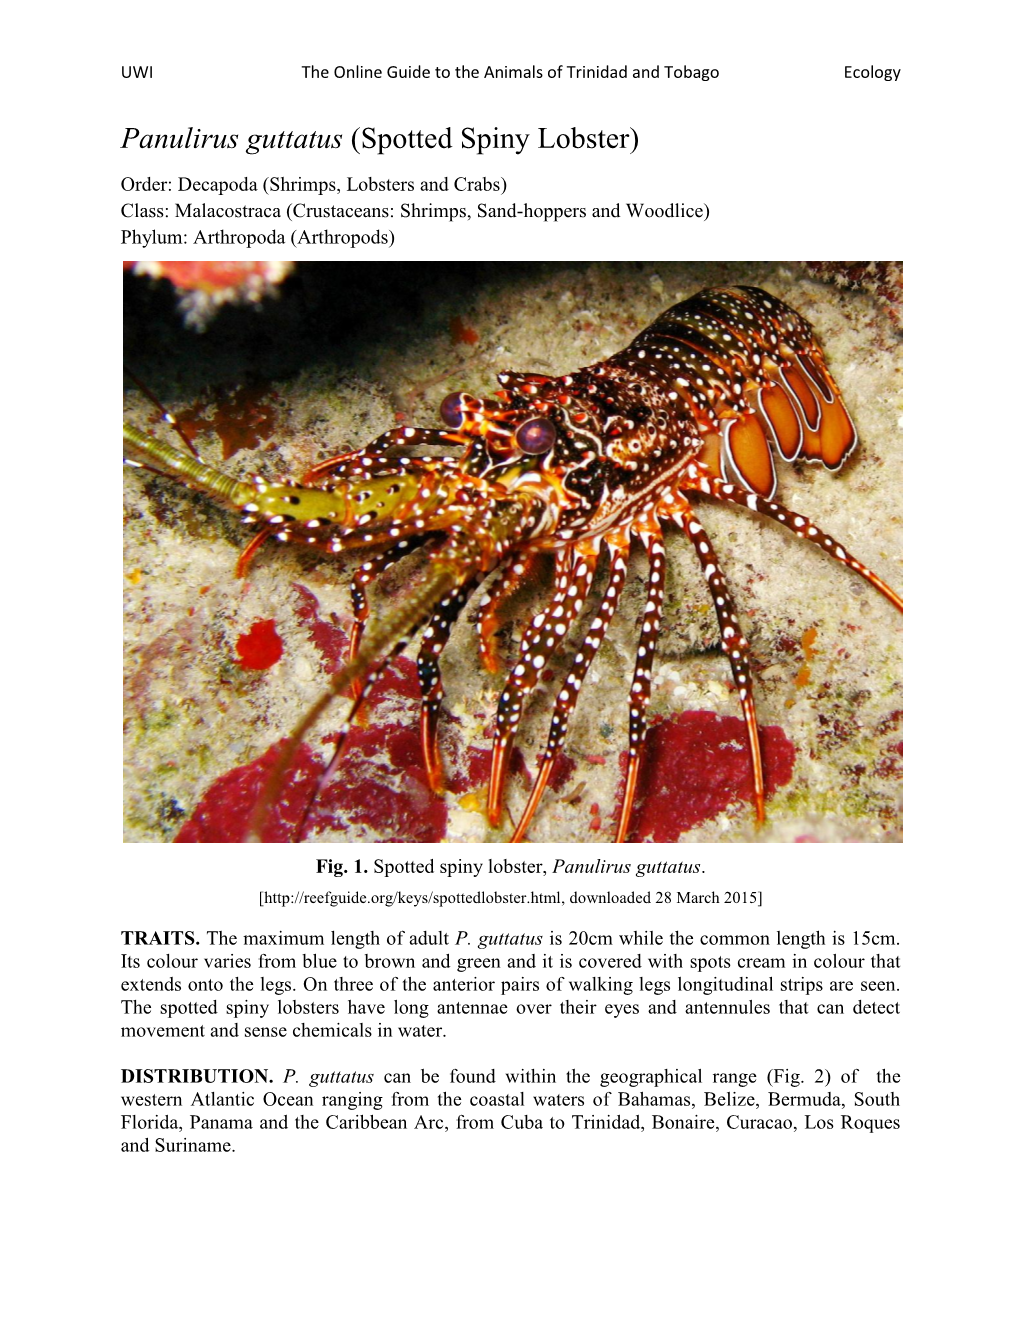 Panulirus Guttatus (Spotted Spiny Lobster)